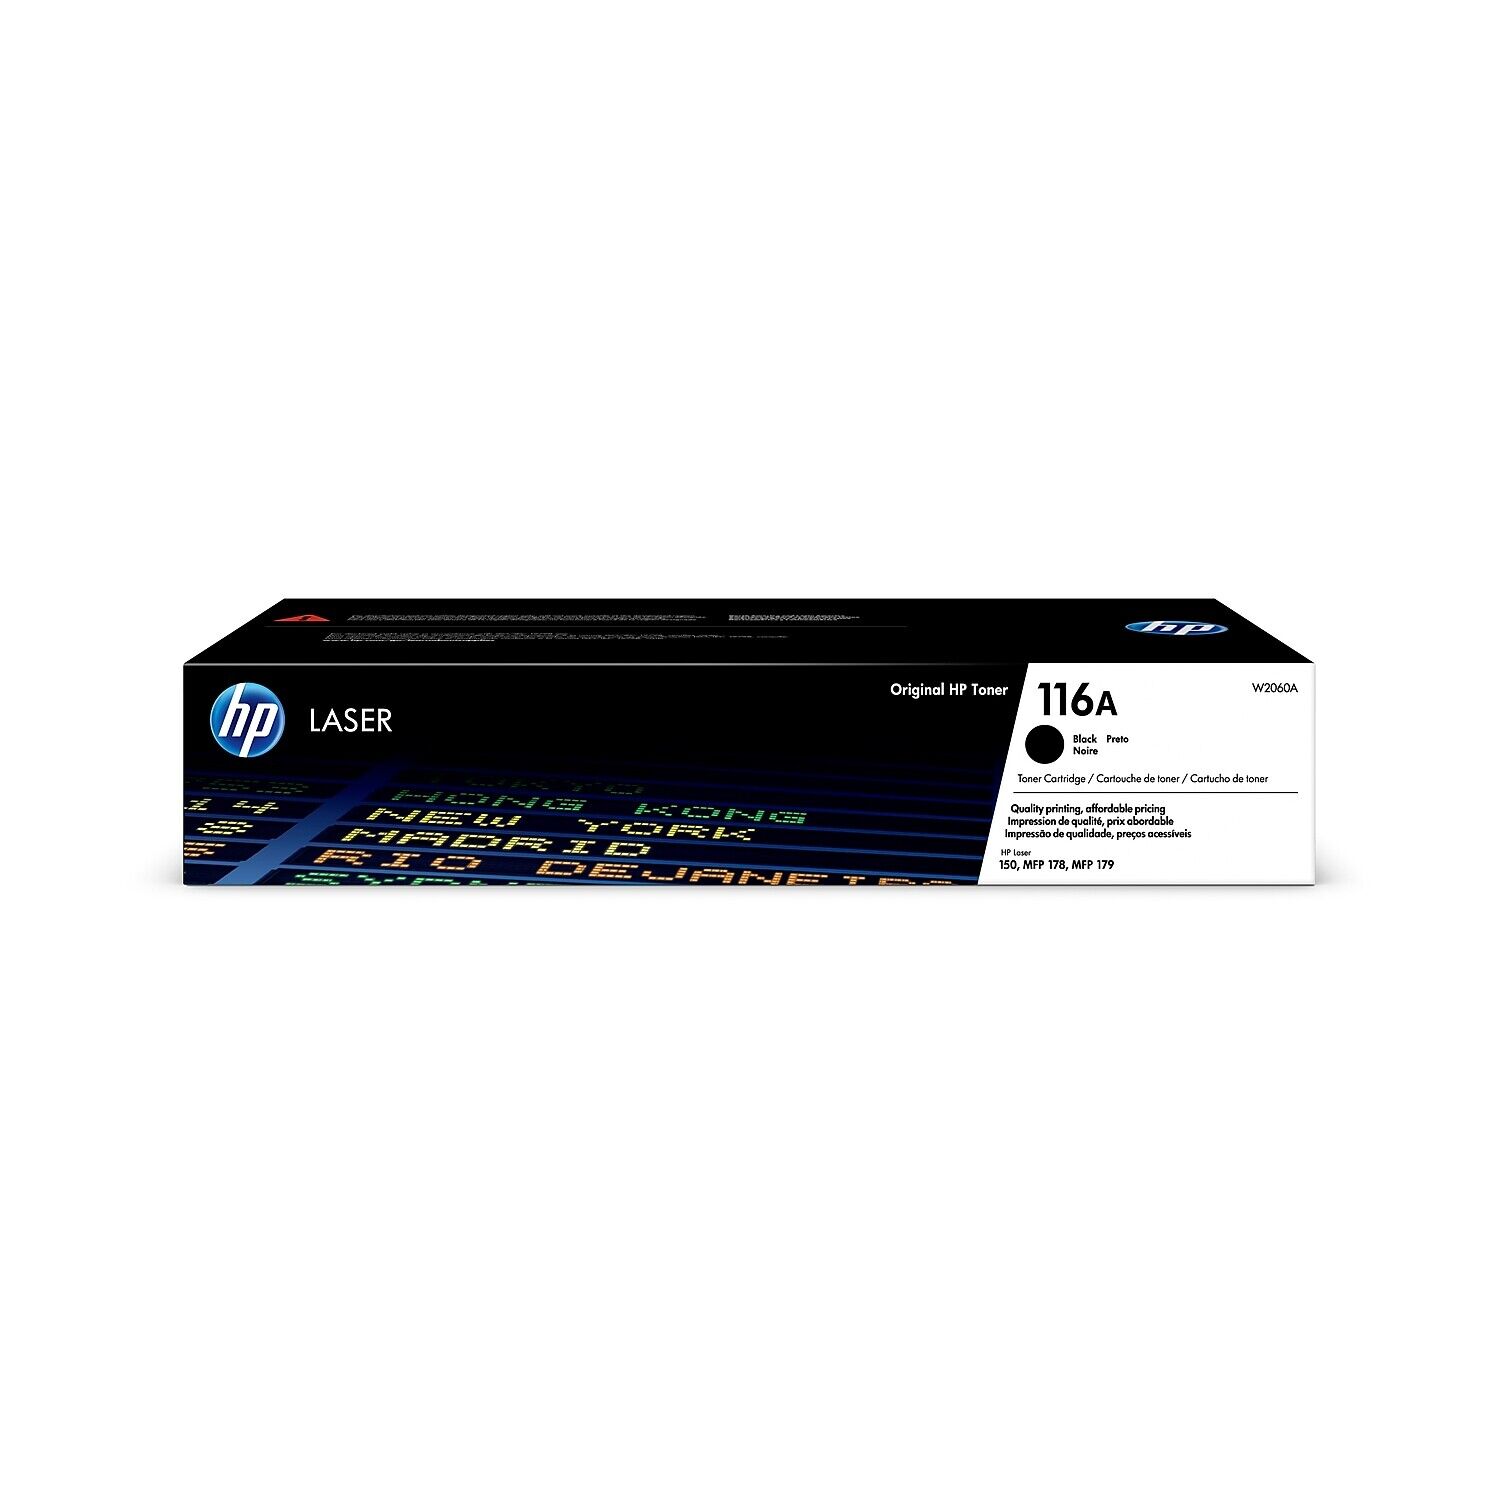 HP Inc. HP 116A Black Toner Cartridge Standard Yield W2060A